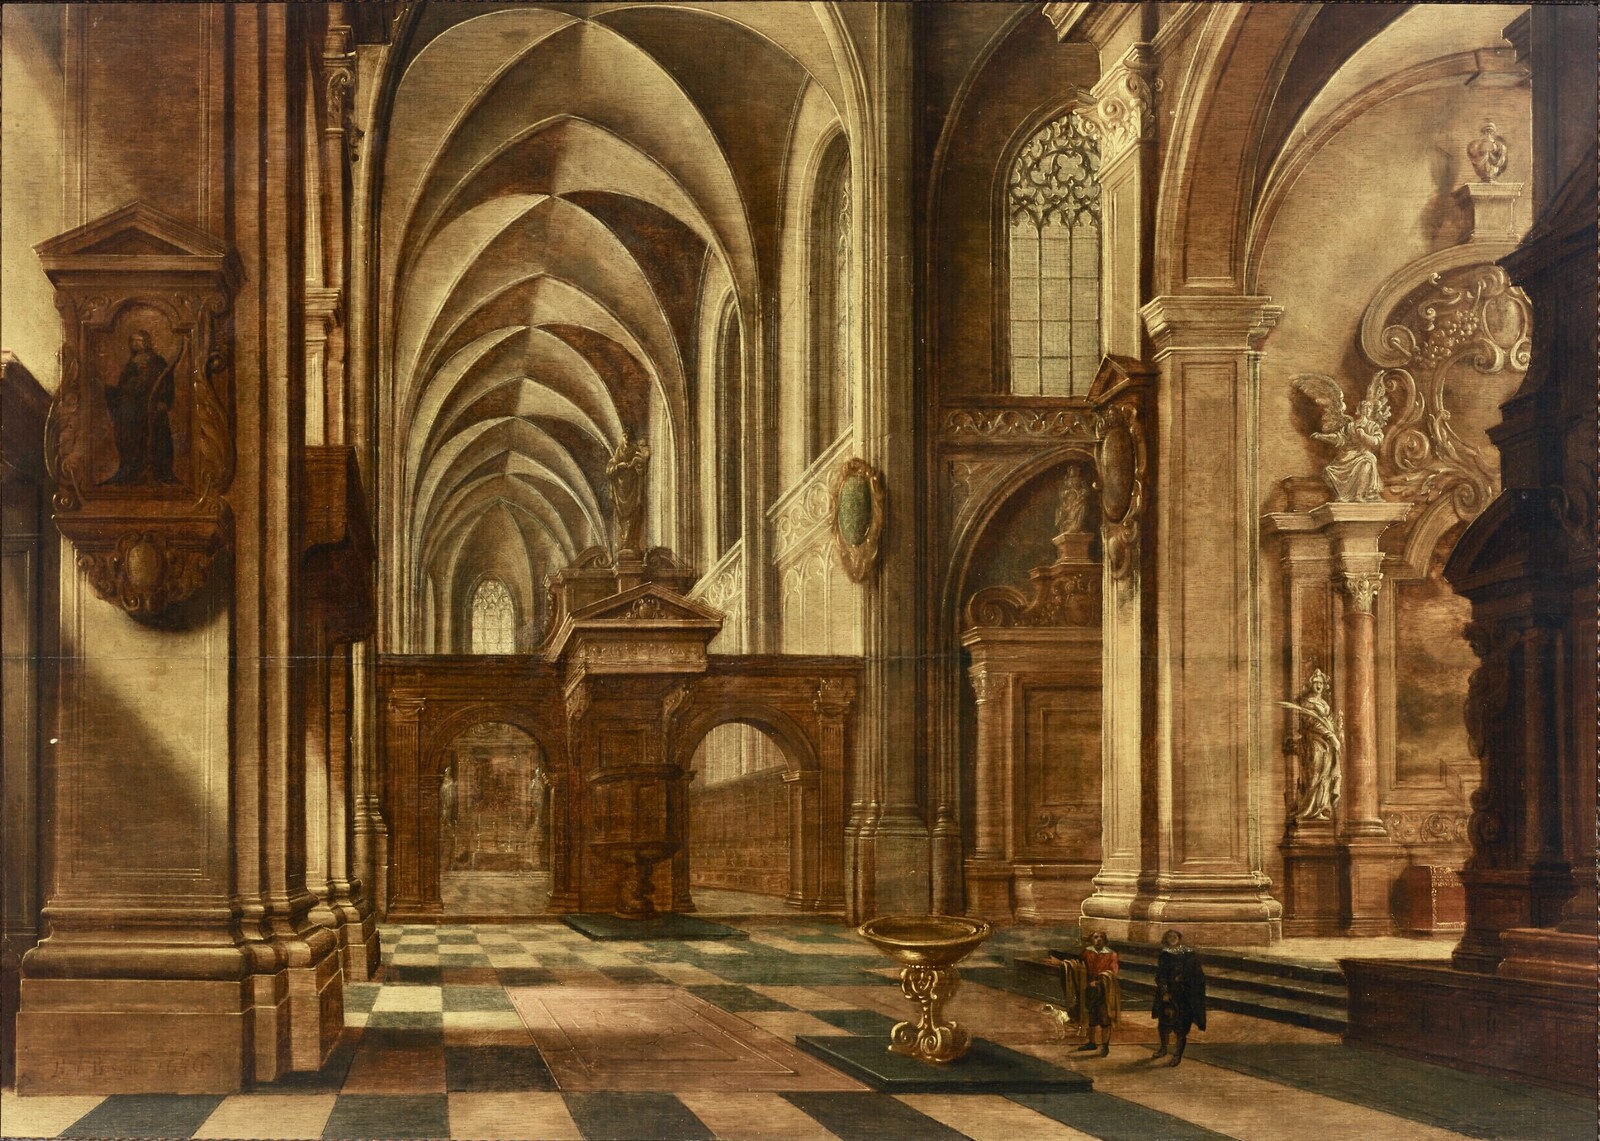 A Catholic church interior